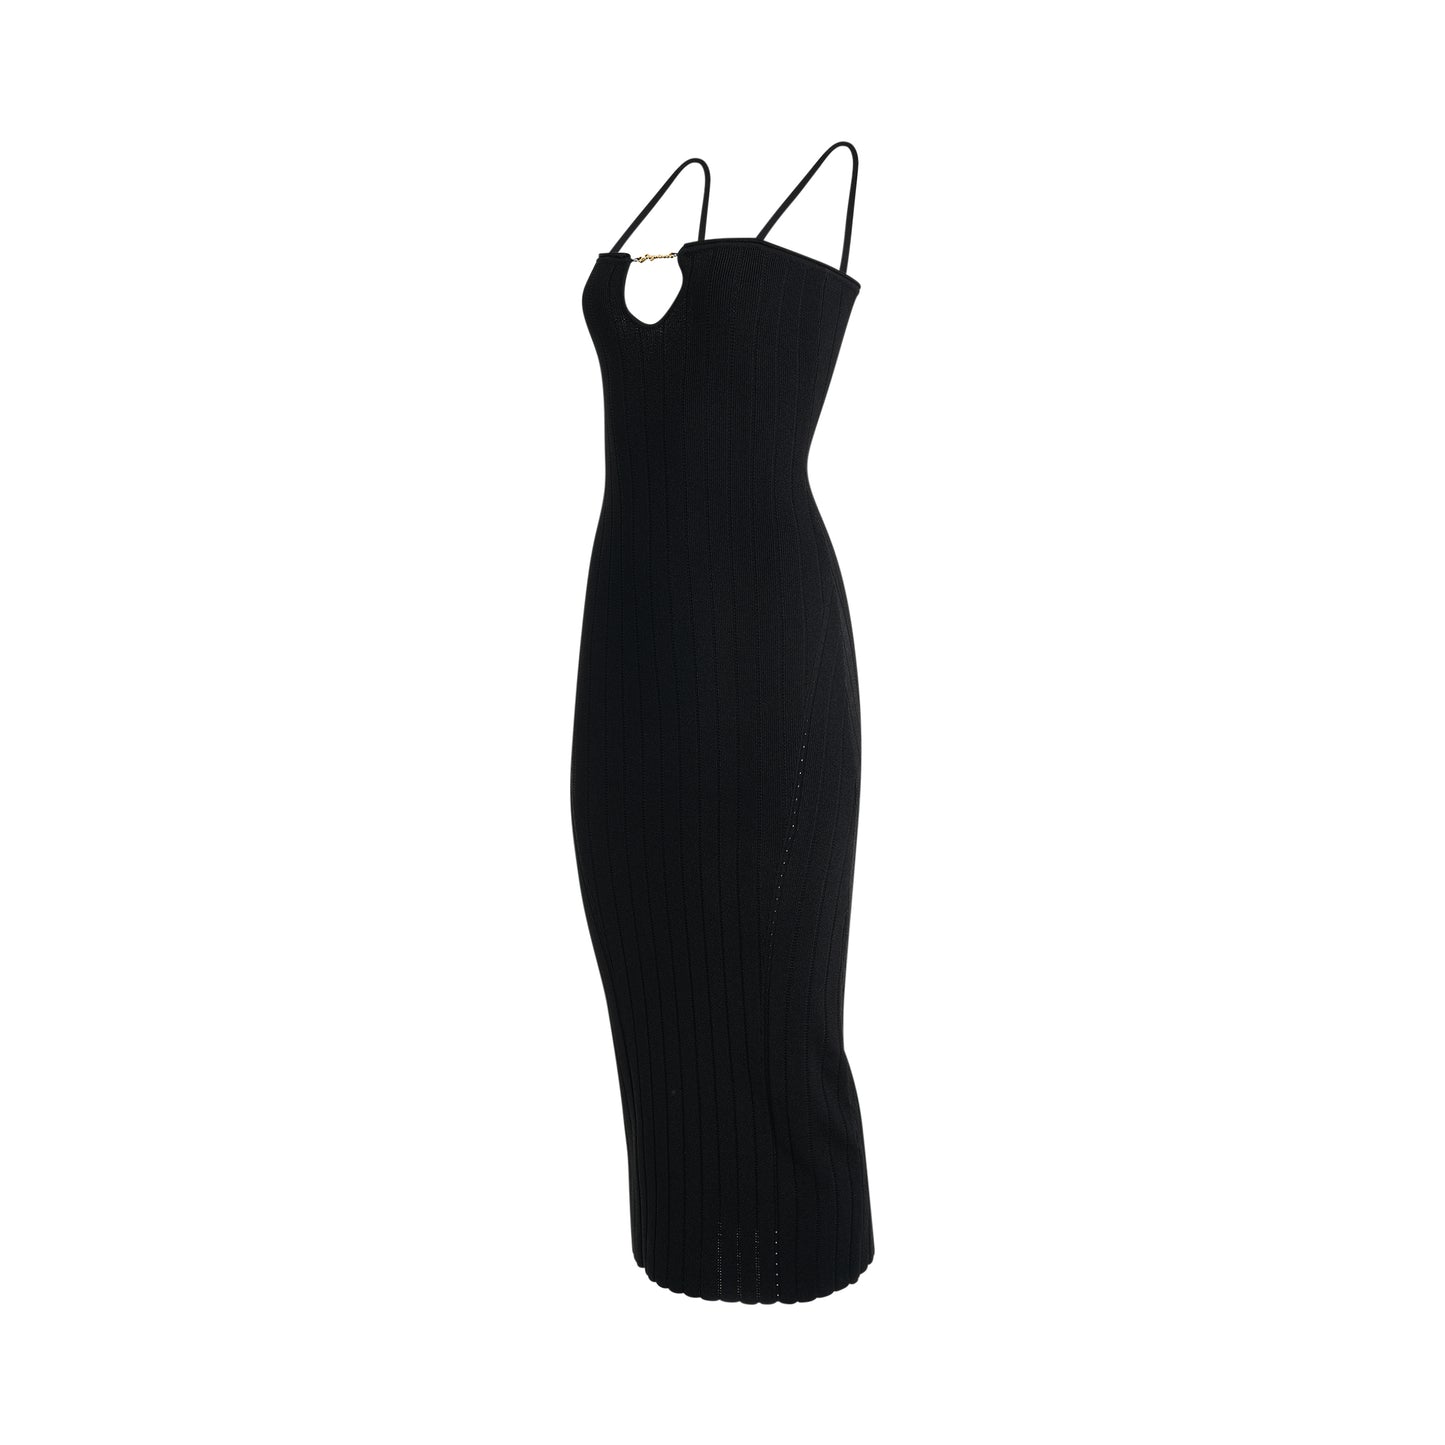 Sierra Bretelles Dress in Black